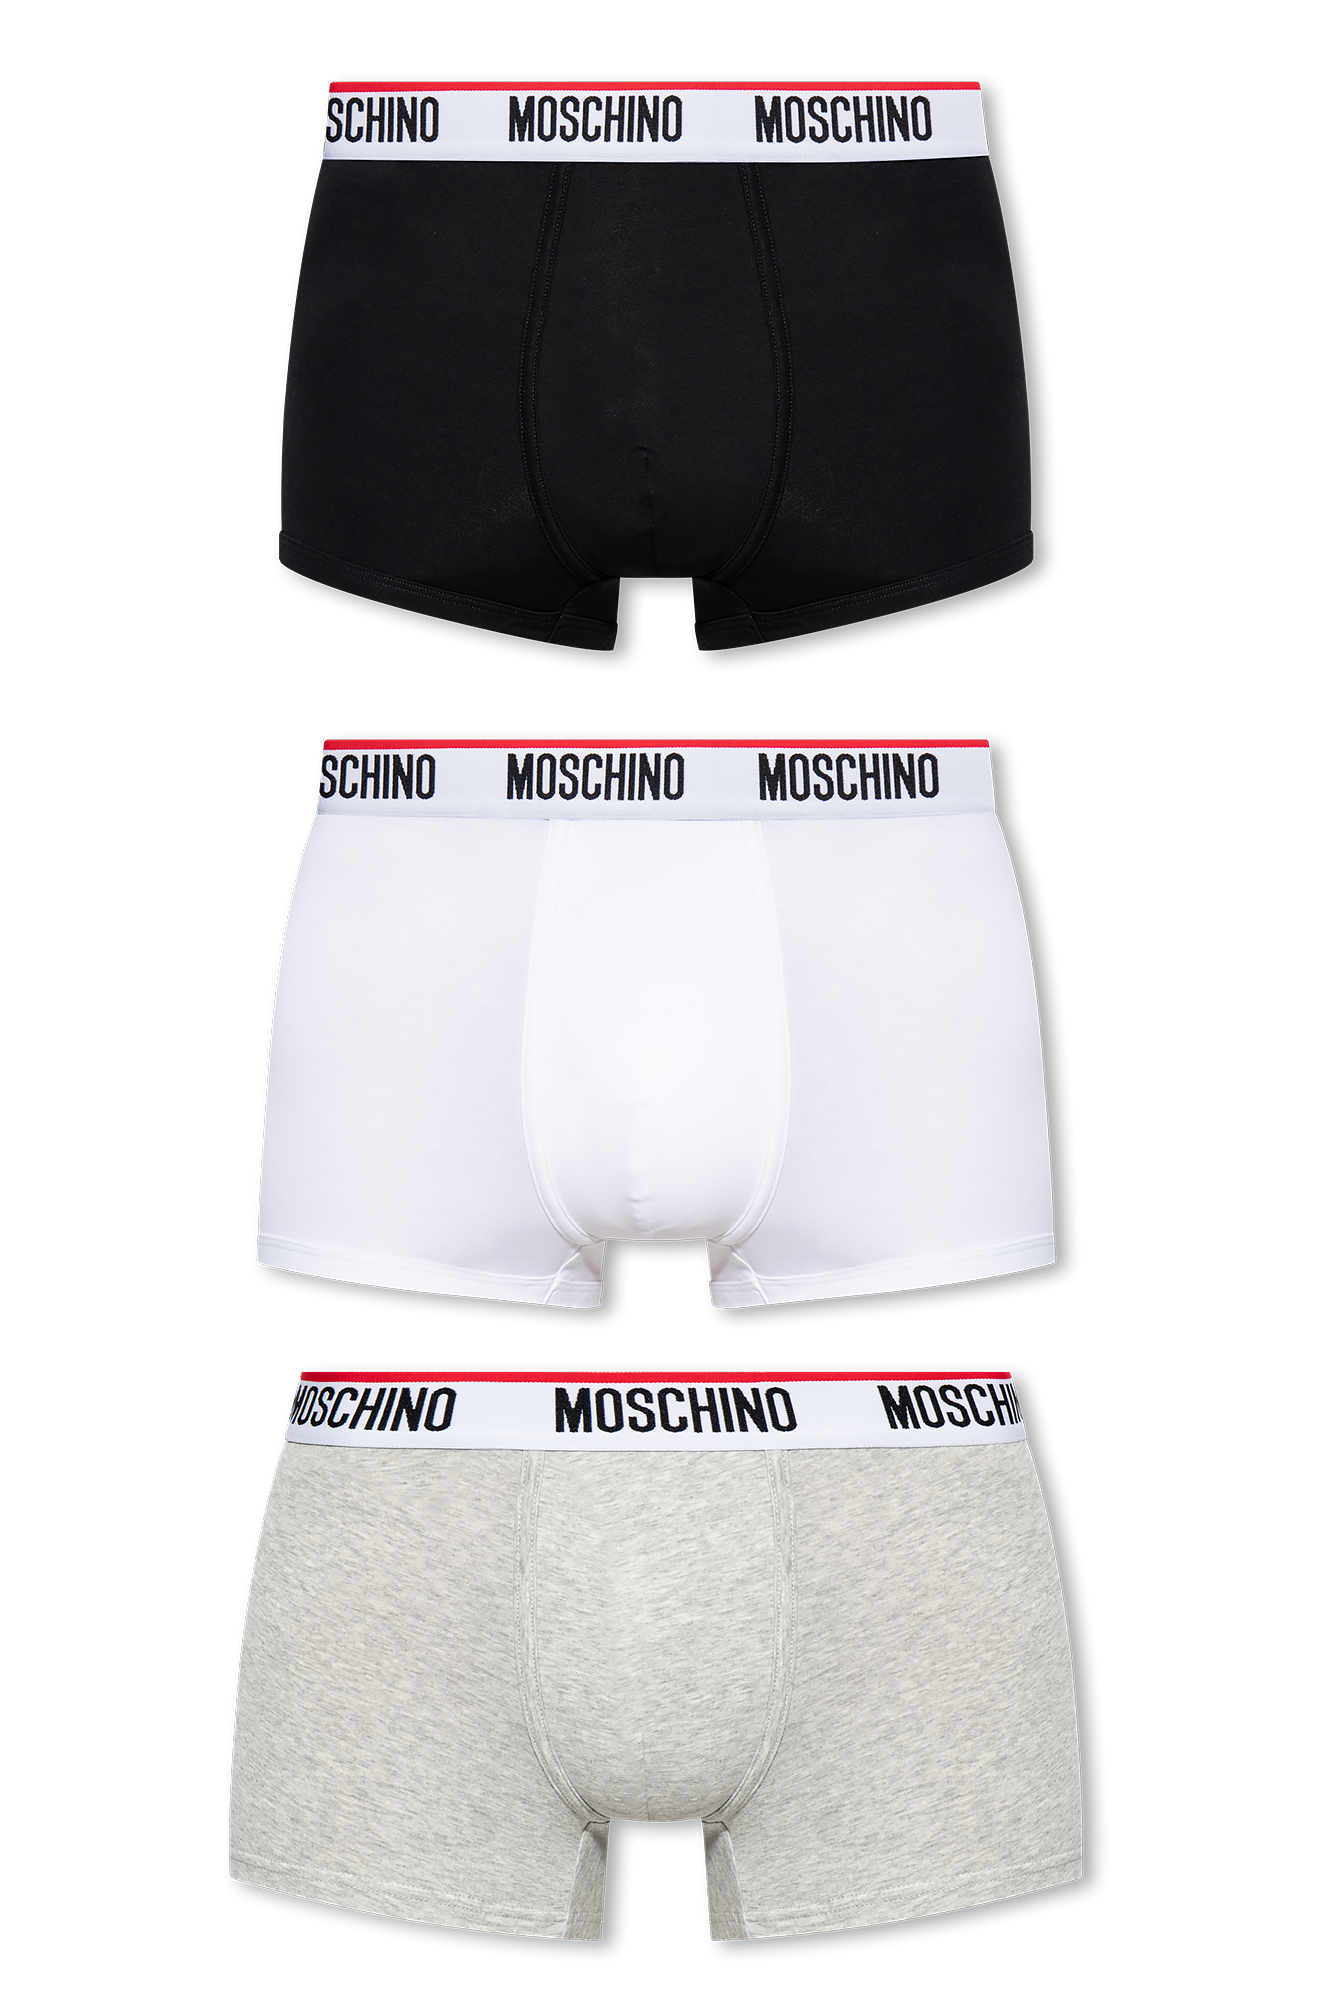 Moschino Underwear 3 Pack Boxers Grey Black White